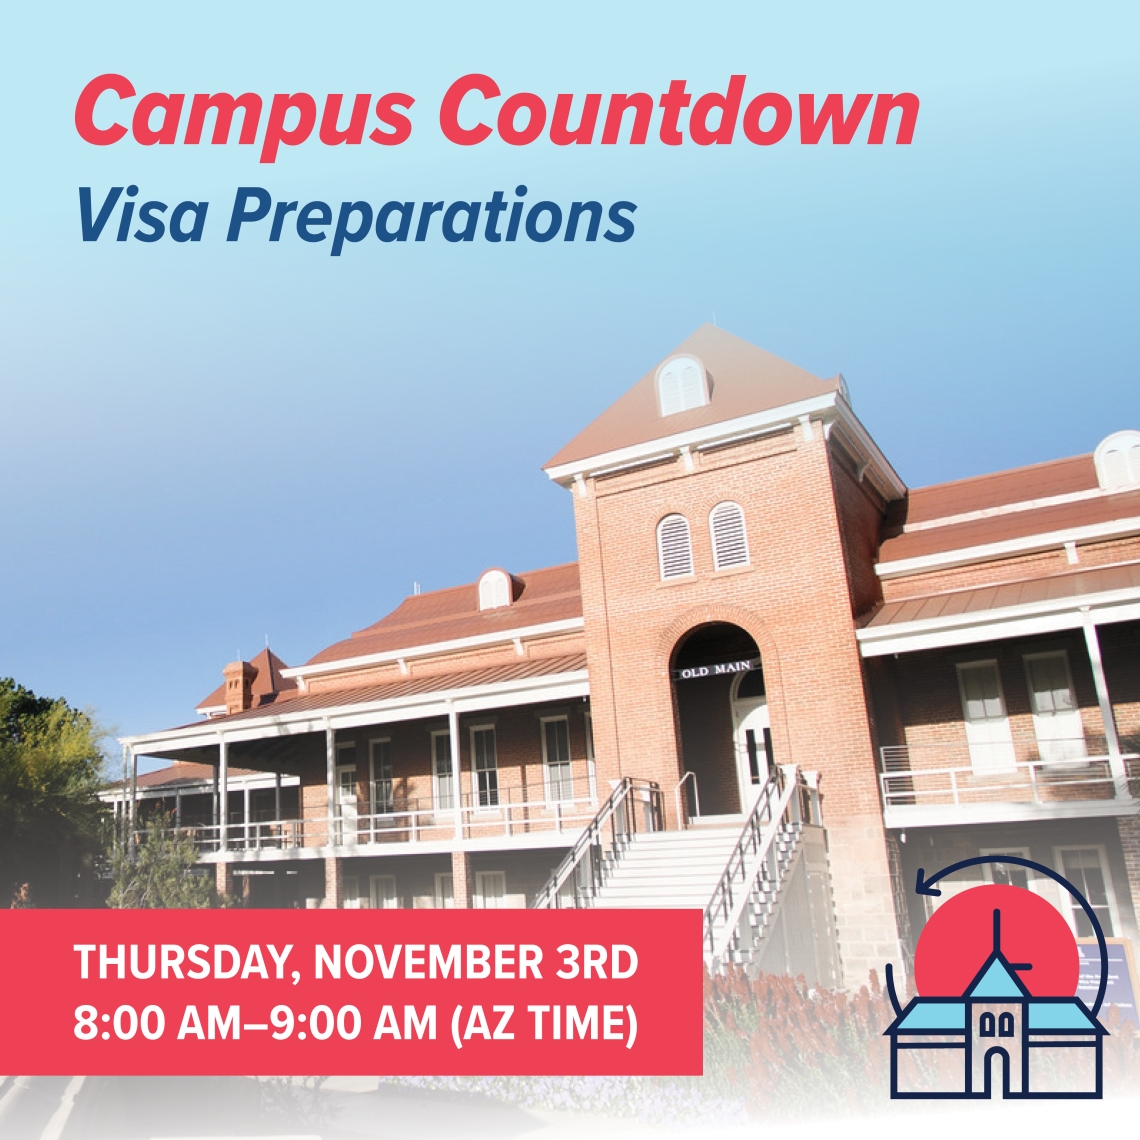 Campus Countdown Visa Preparations